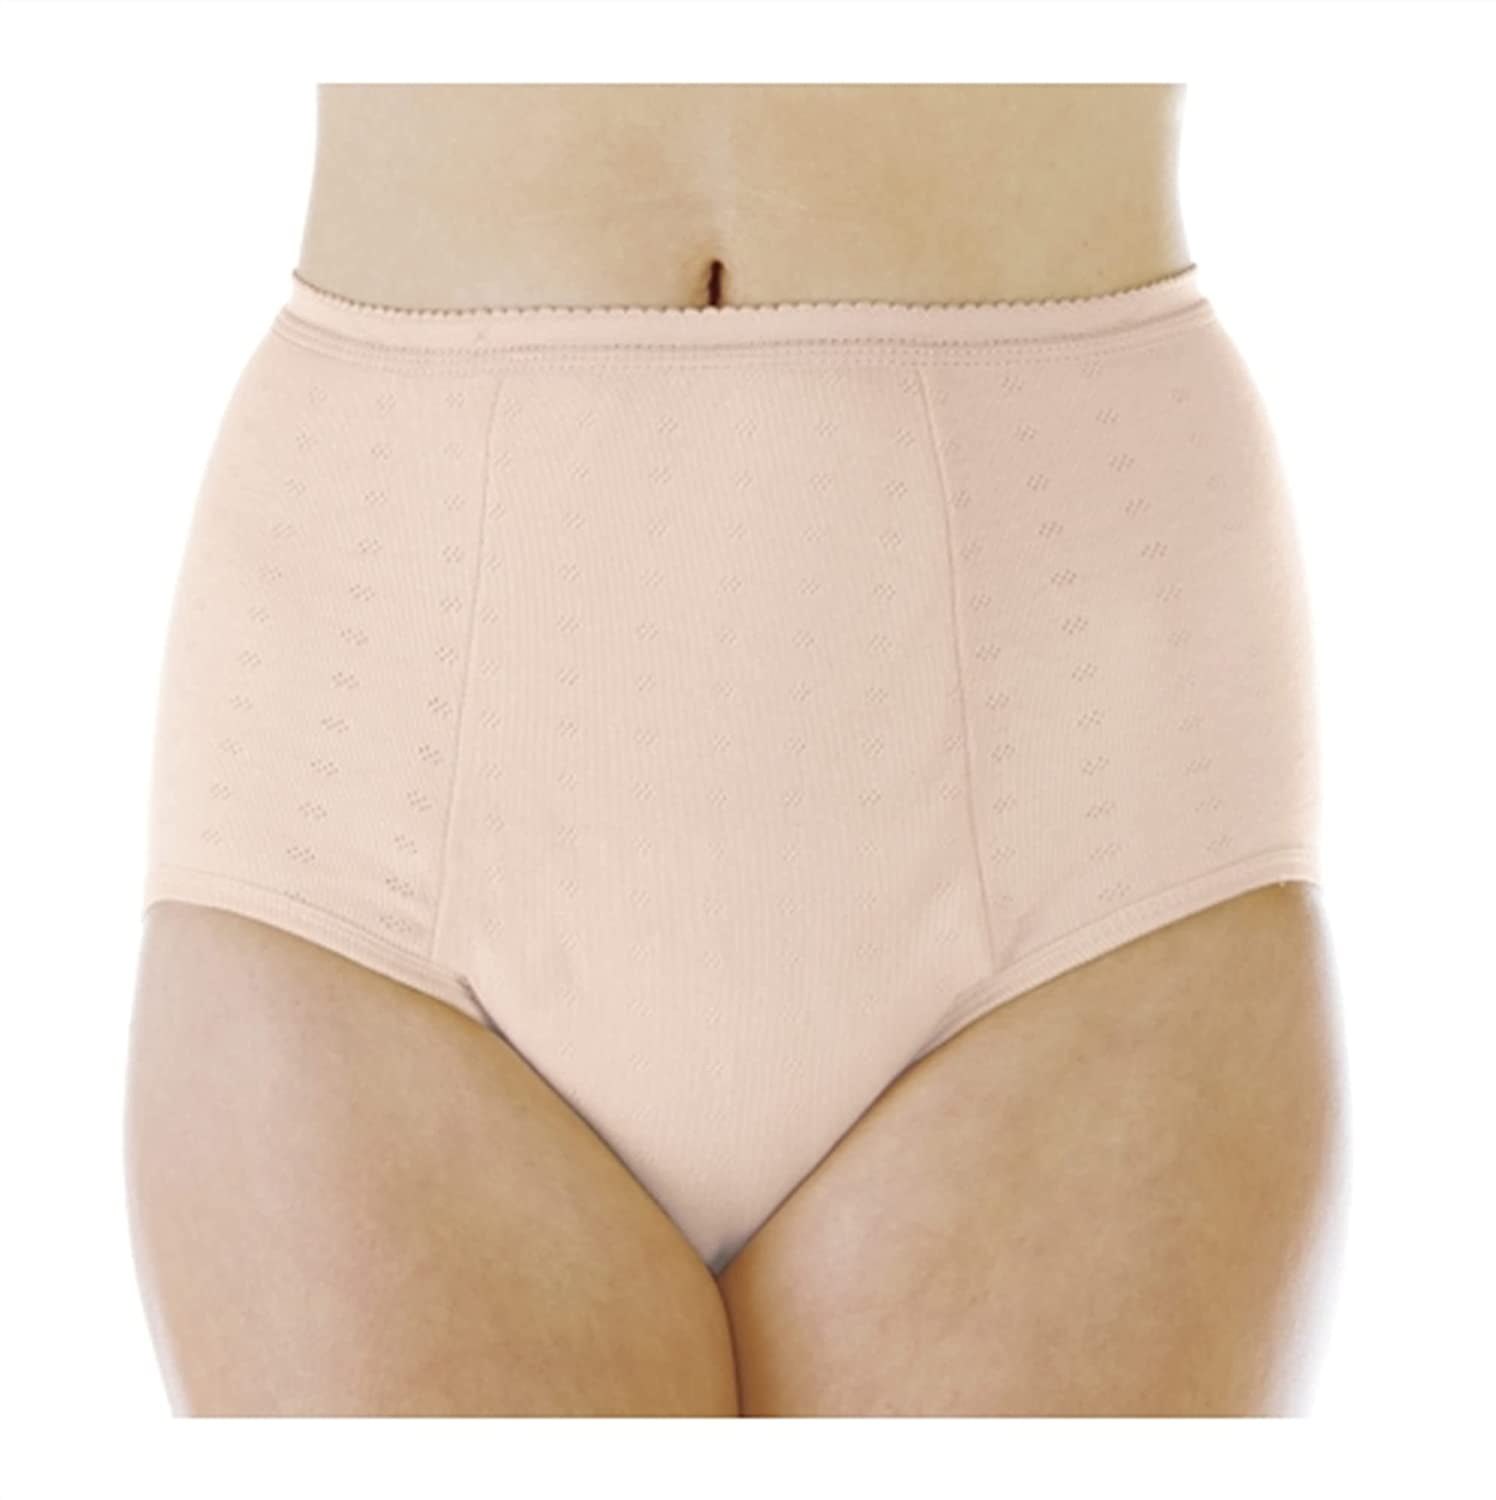 Wearever Women's Incontinence Underwear, Super Absorbent Bladder Control Panties, Reusable Single Pair